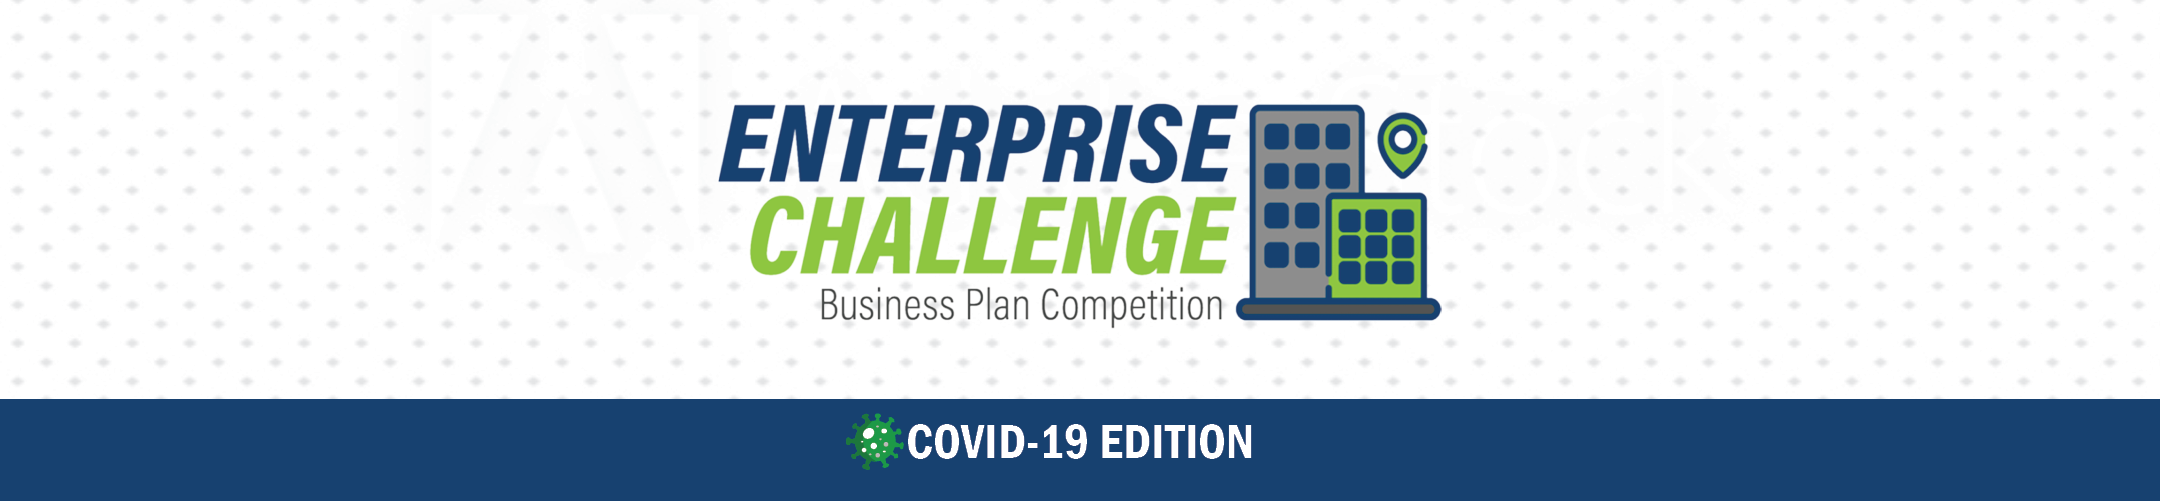 Enterprise-Challenge-YCDA-Website-Banner-2021-6 edit